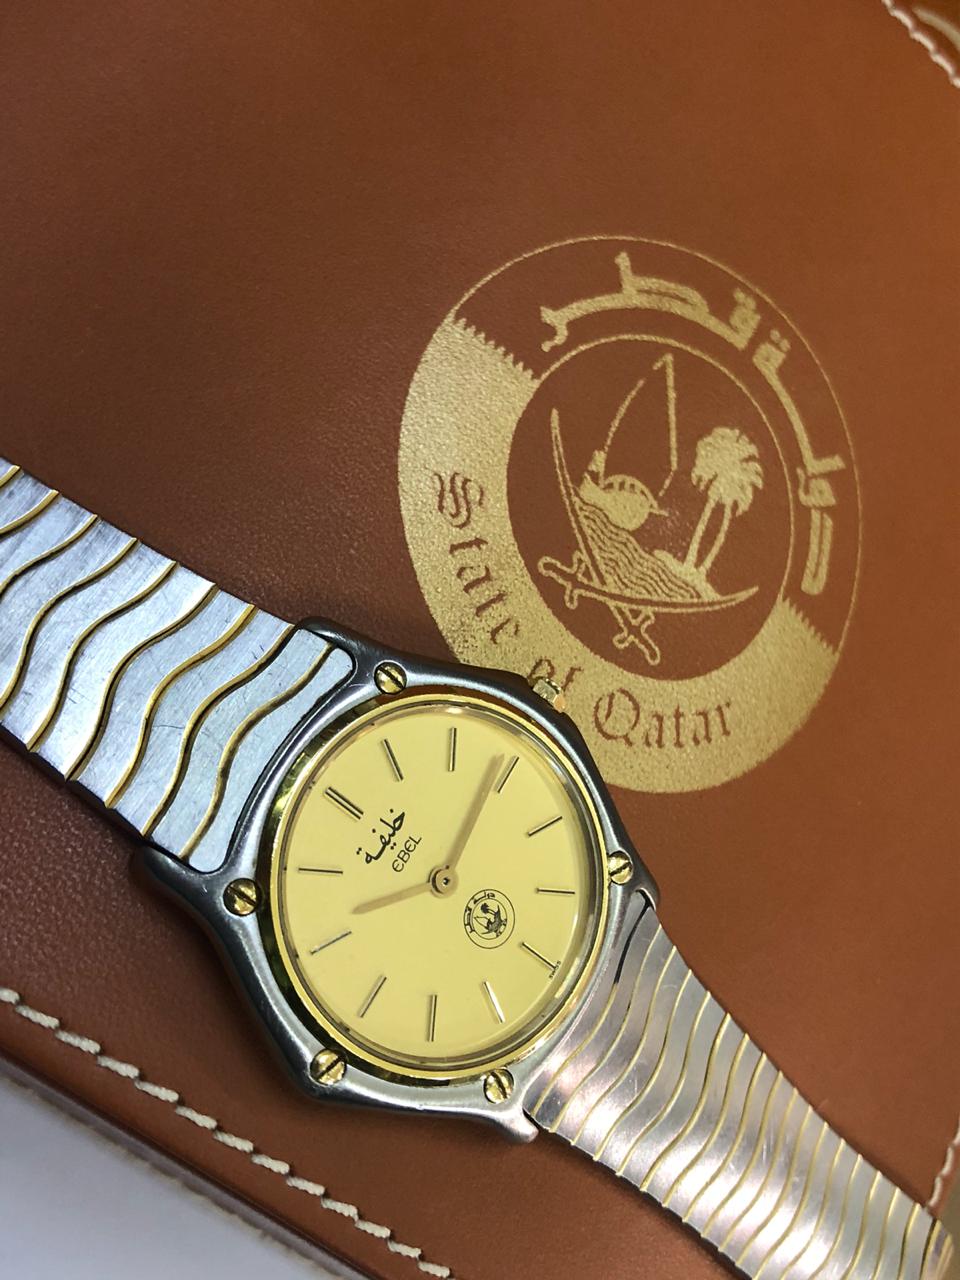 Ebel Quartz 81 Gold S Steel Men’s Watch Special Edition Qatar Court Emir Khalifa ساعة ايبل هدية من المرحوم الامير خليفة ال ثاني امير دولة قطر